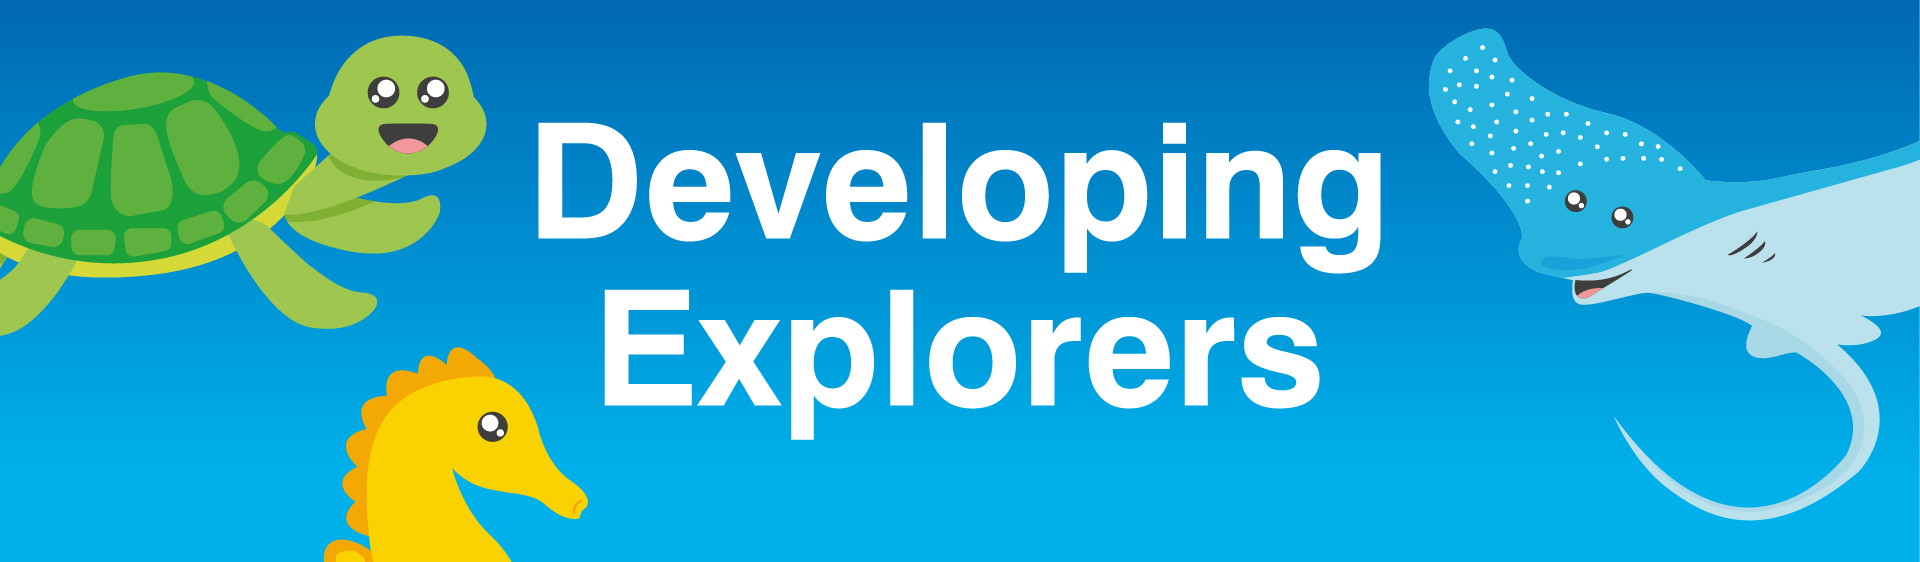 Developing Explorers